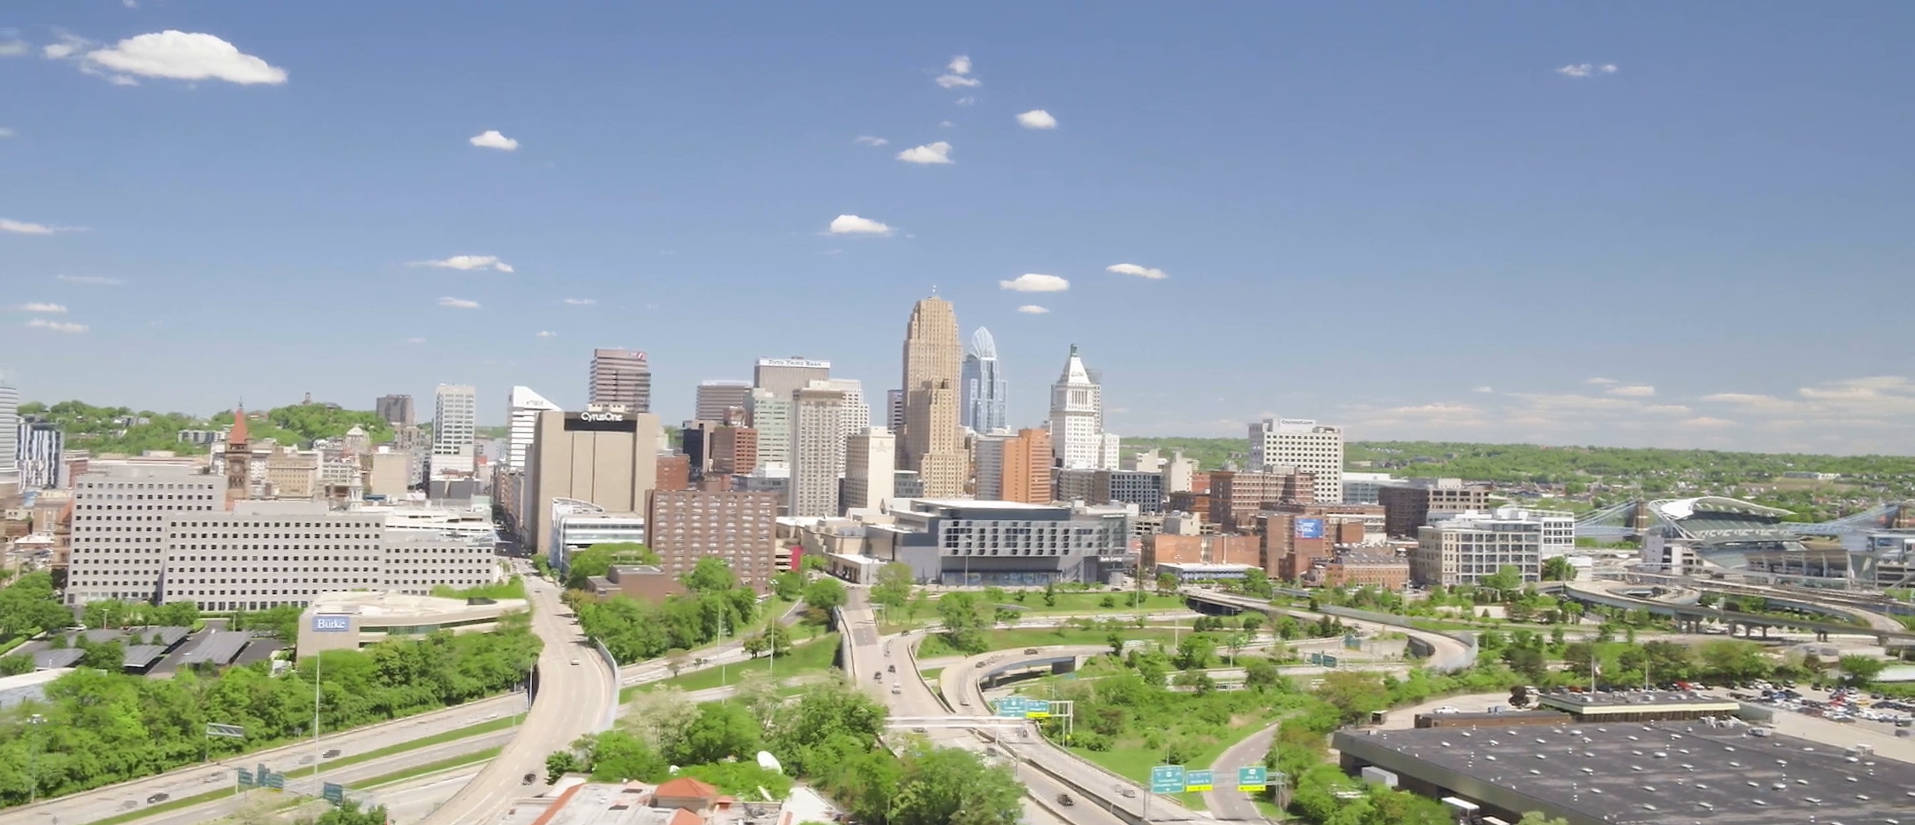 Downtown Cincinnati Ohio Aerial View Wallpaper